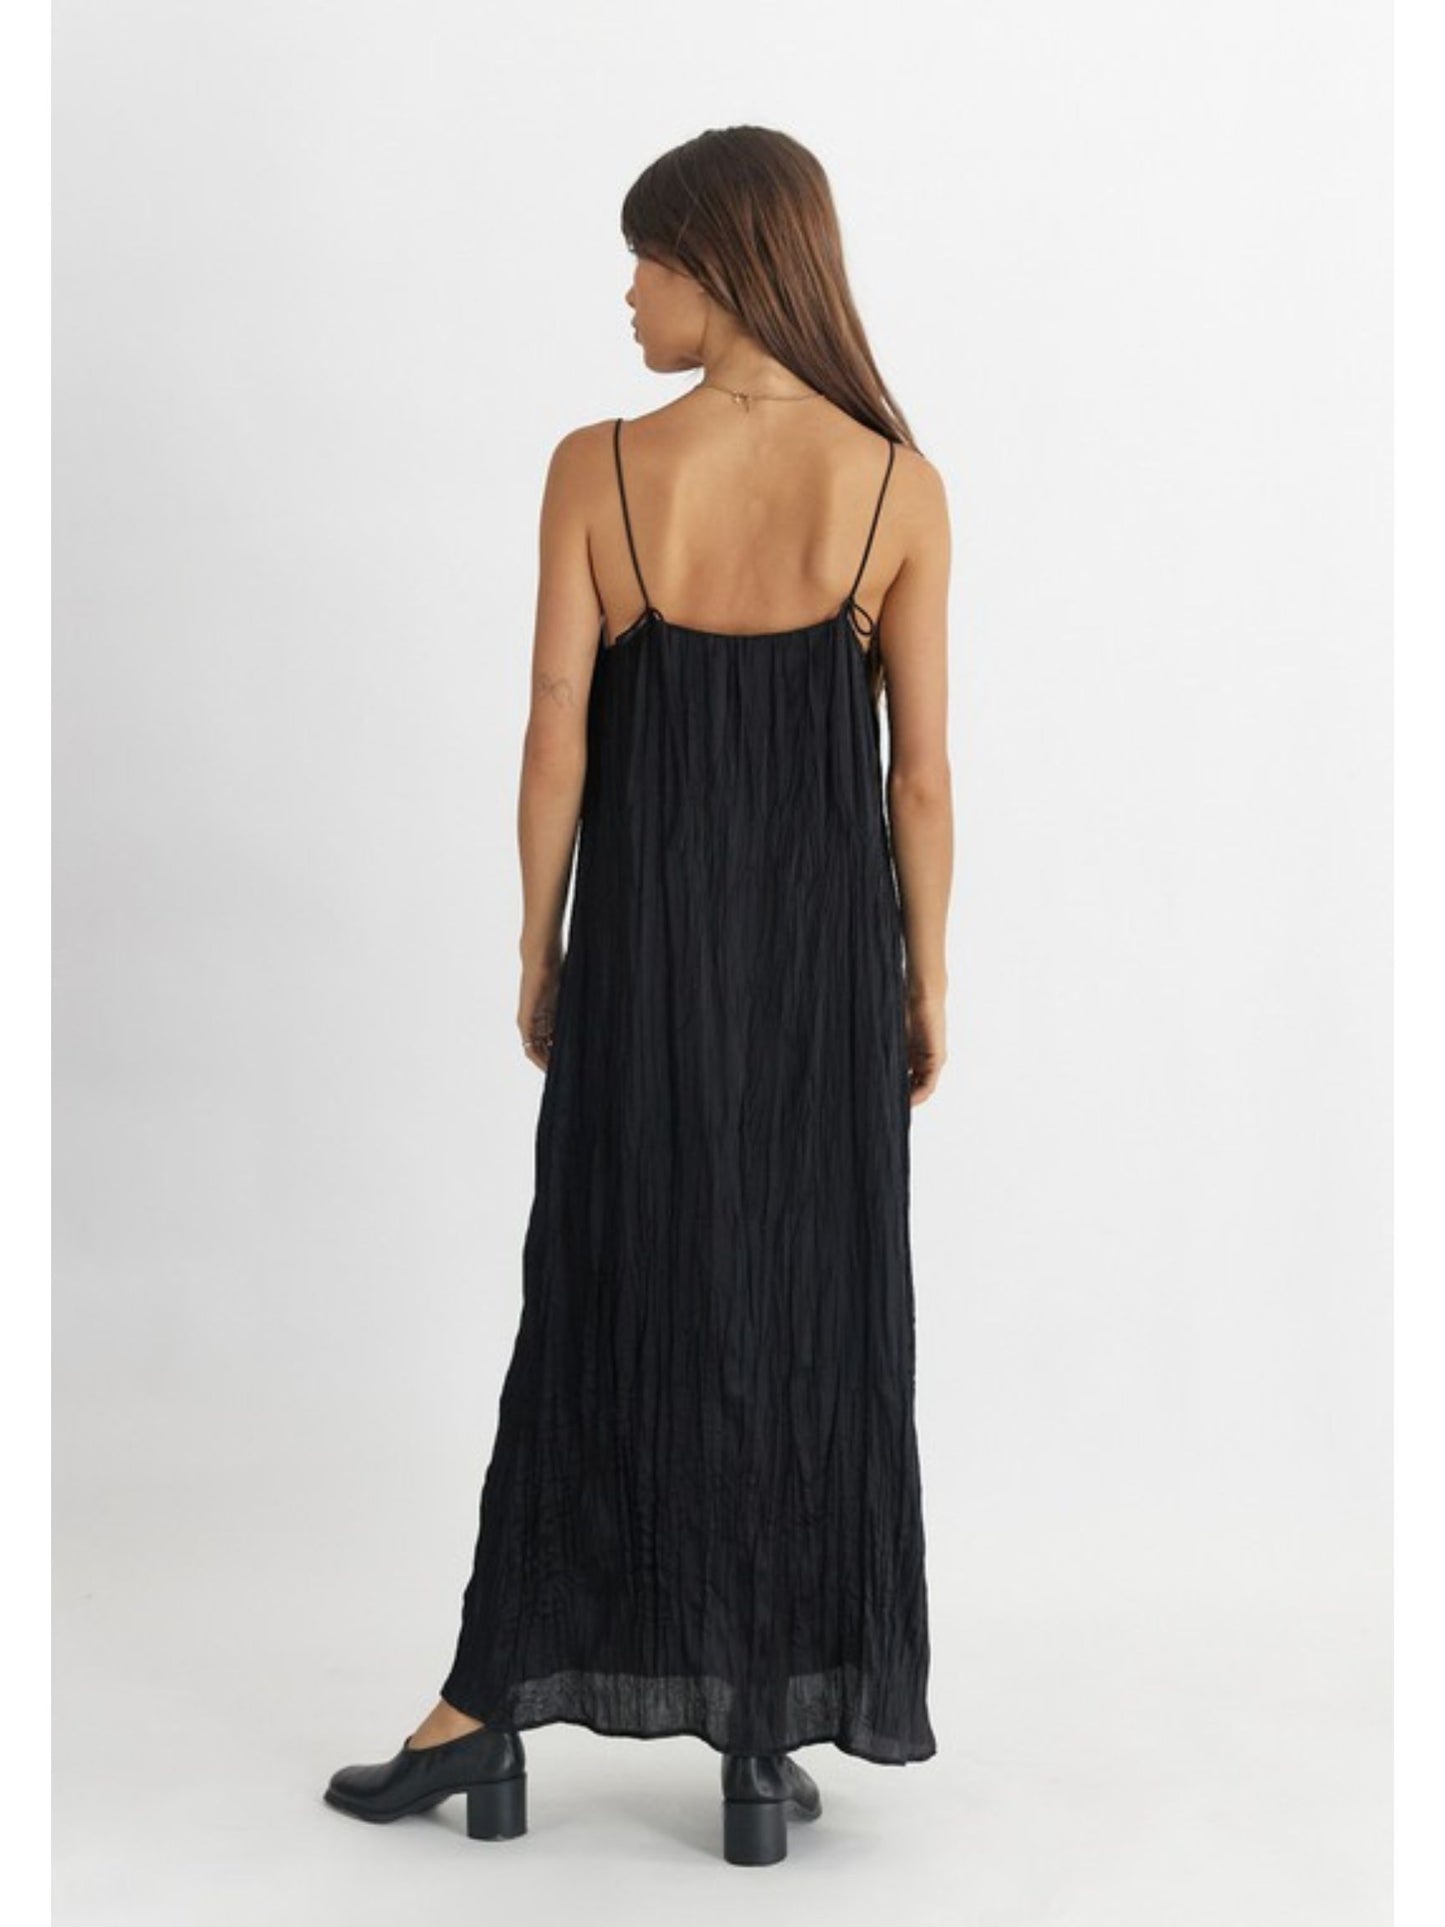 The Cami Dress - Black